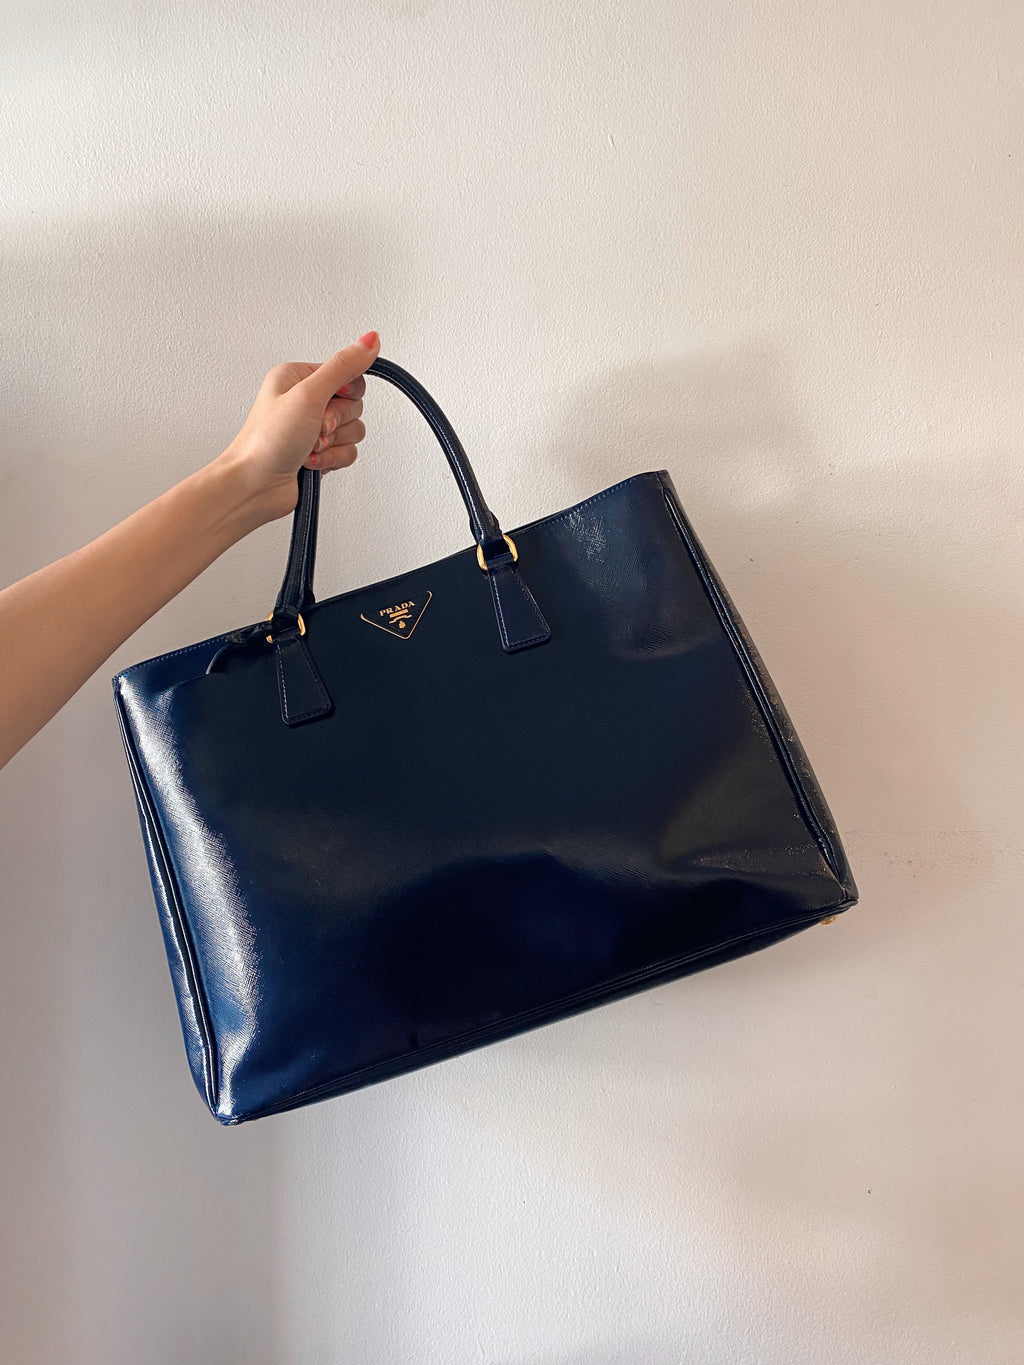 Prada Galleria Saffiano Navy Patent Leather Tote Bag